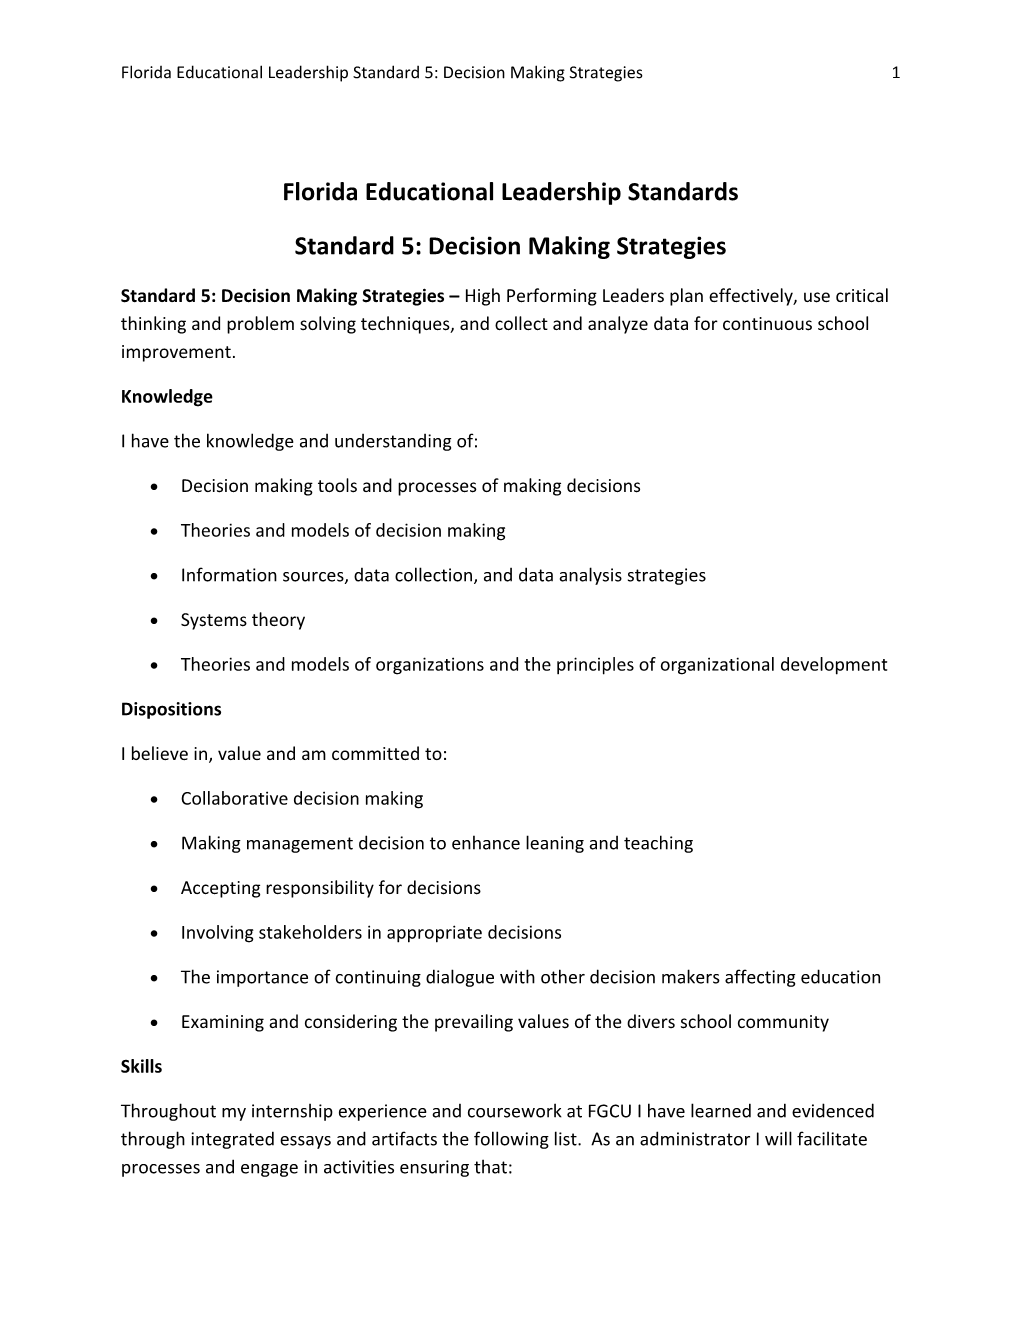 Florida Educational Leadership Standards s1